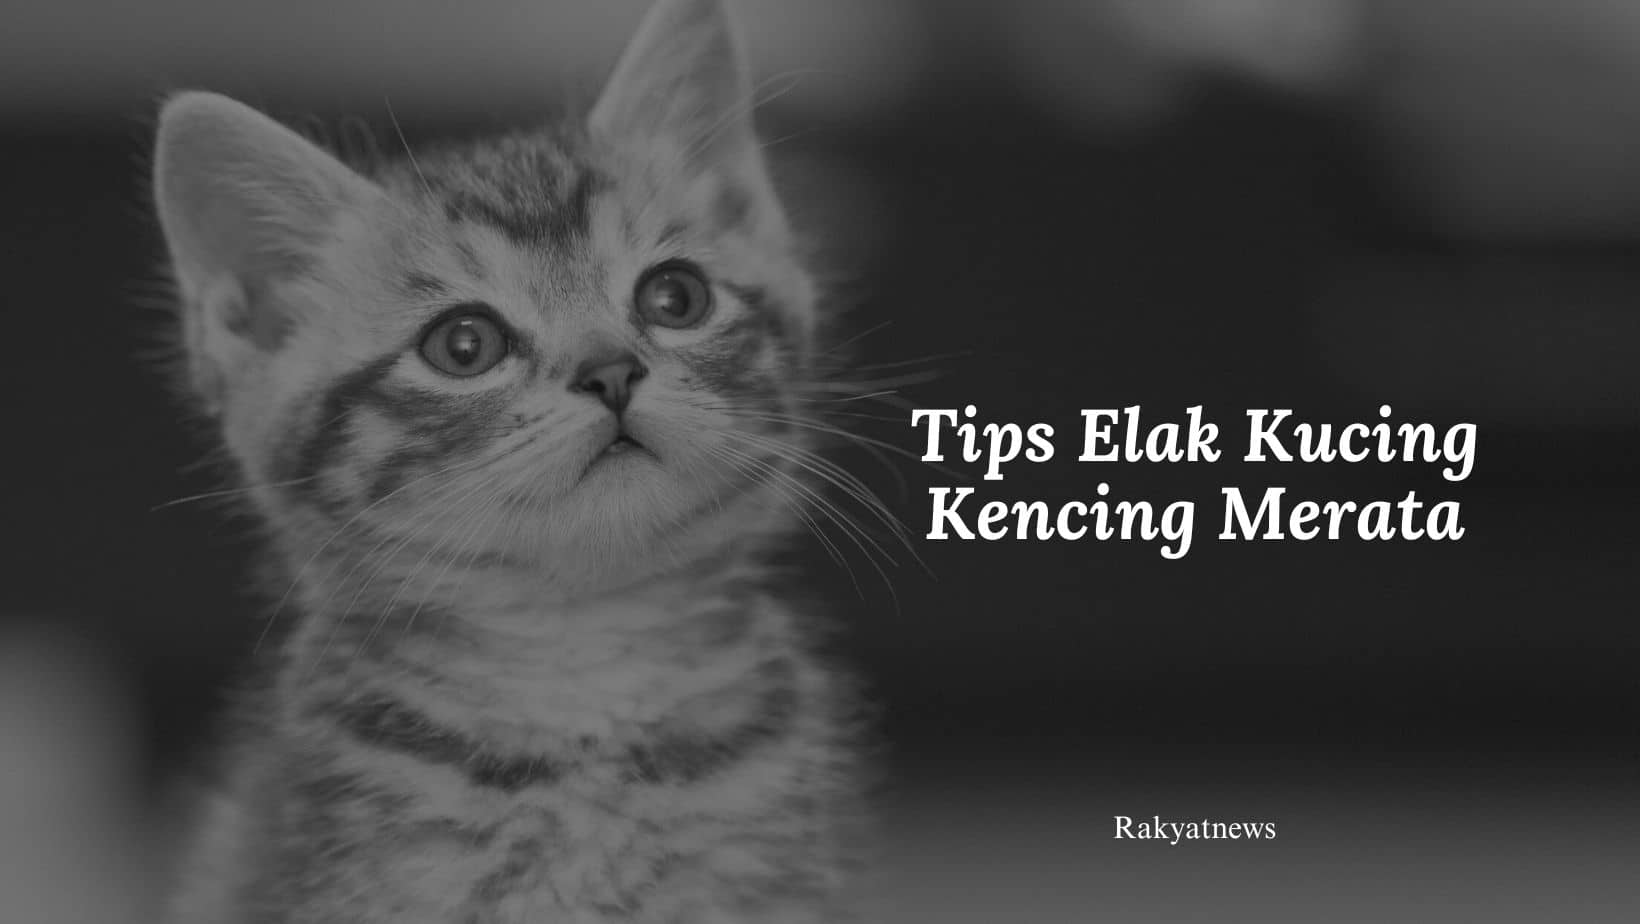 Tips Elak Kucing Kencing Merata